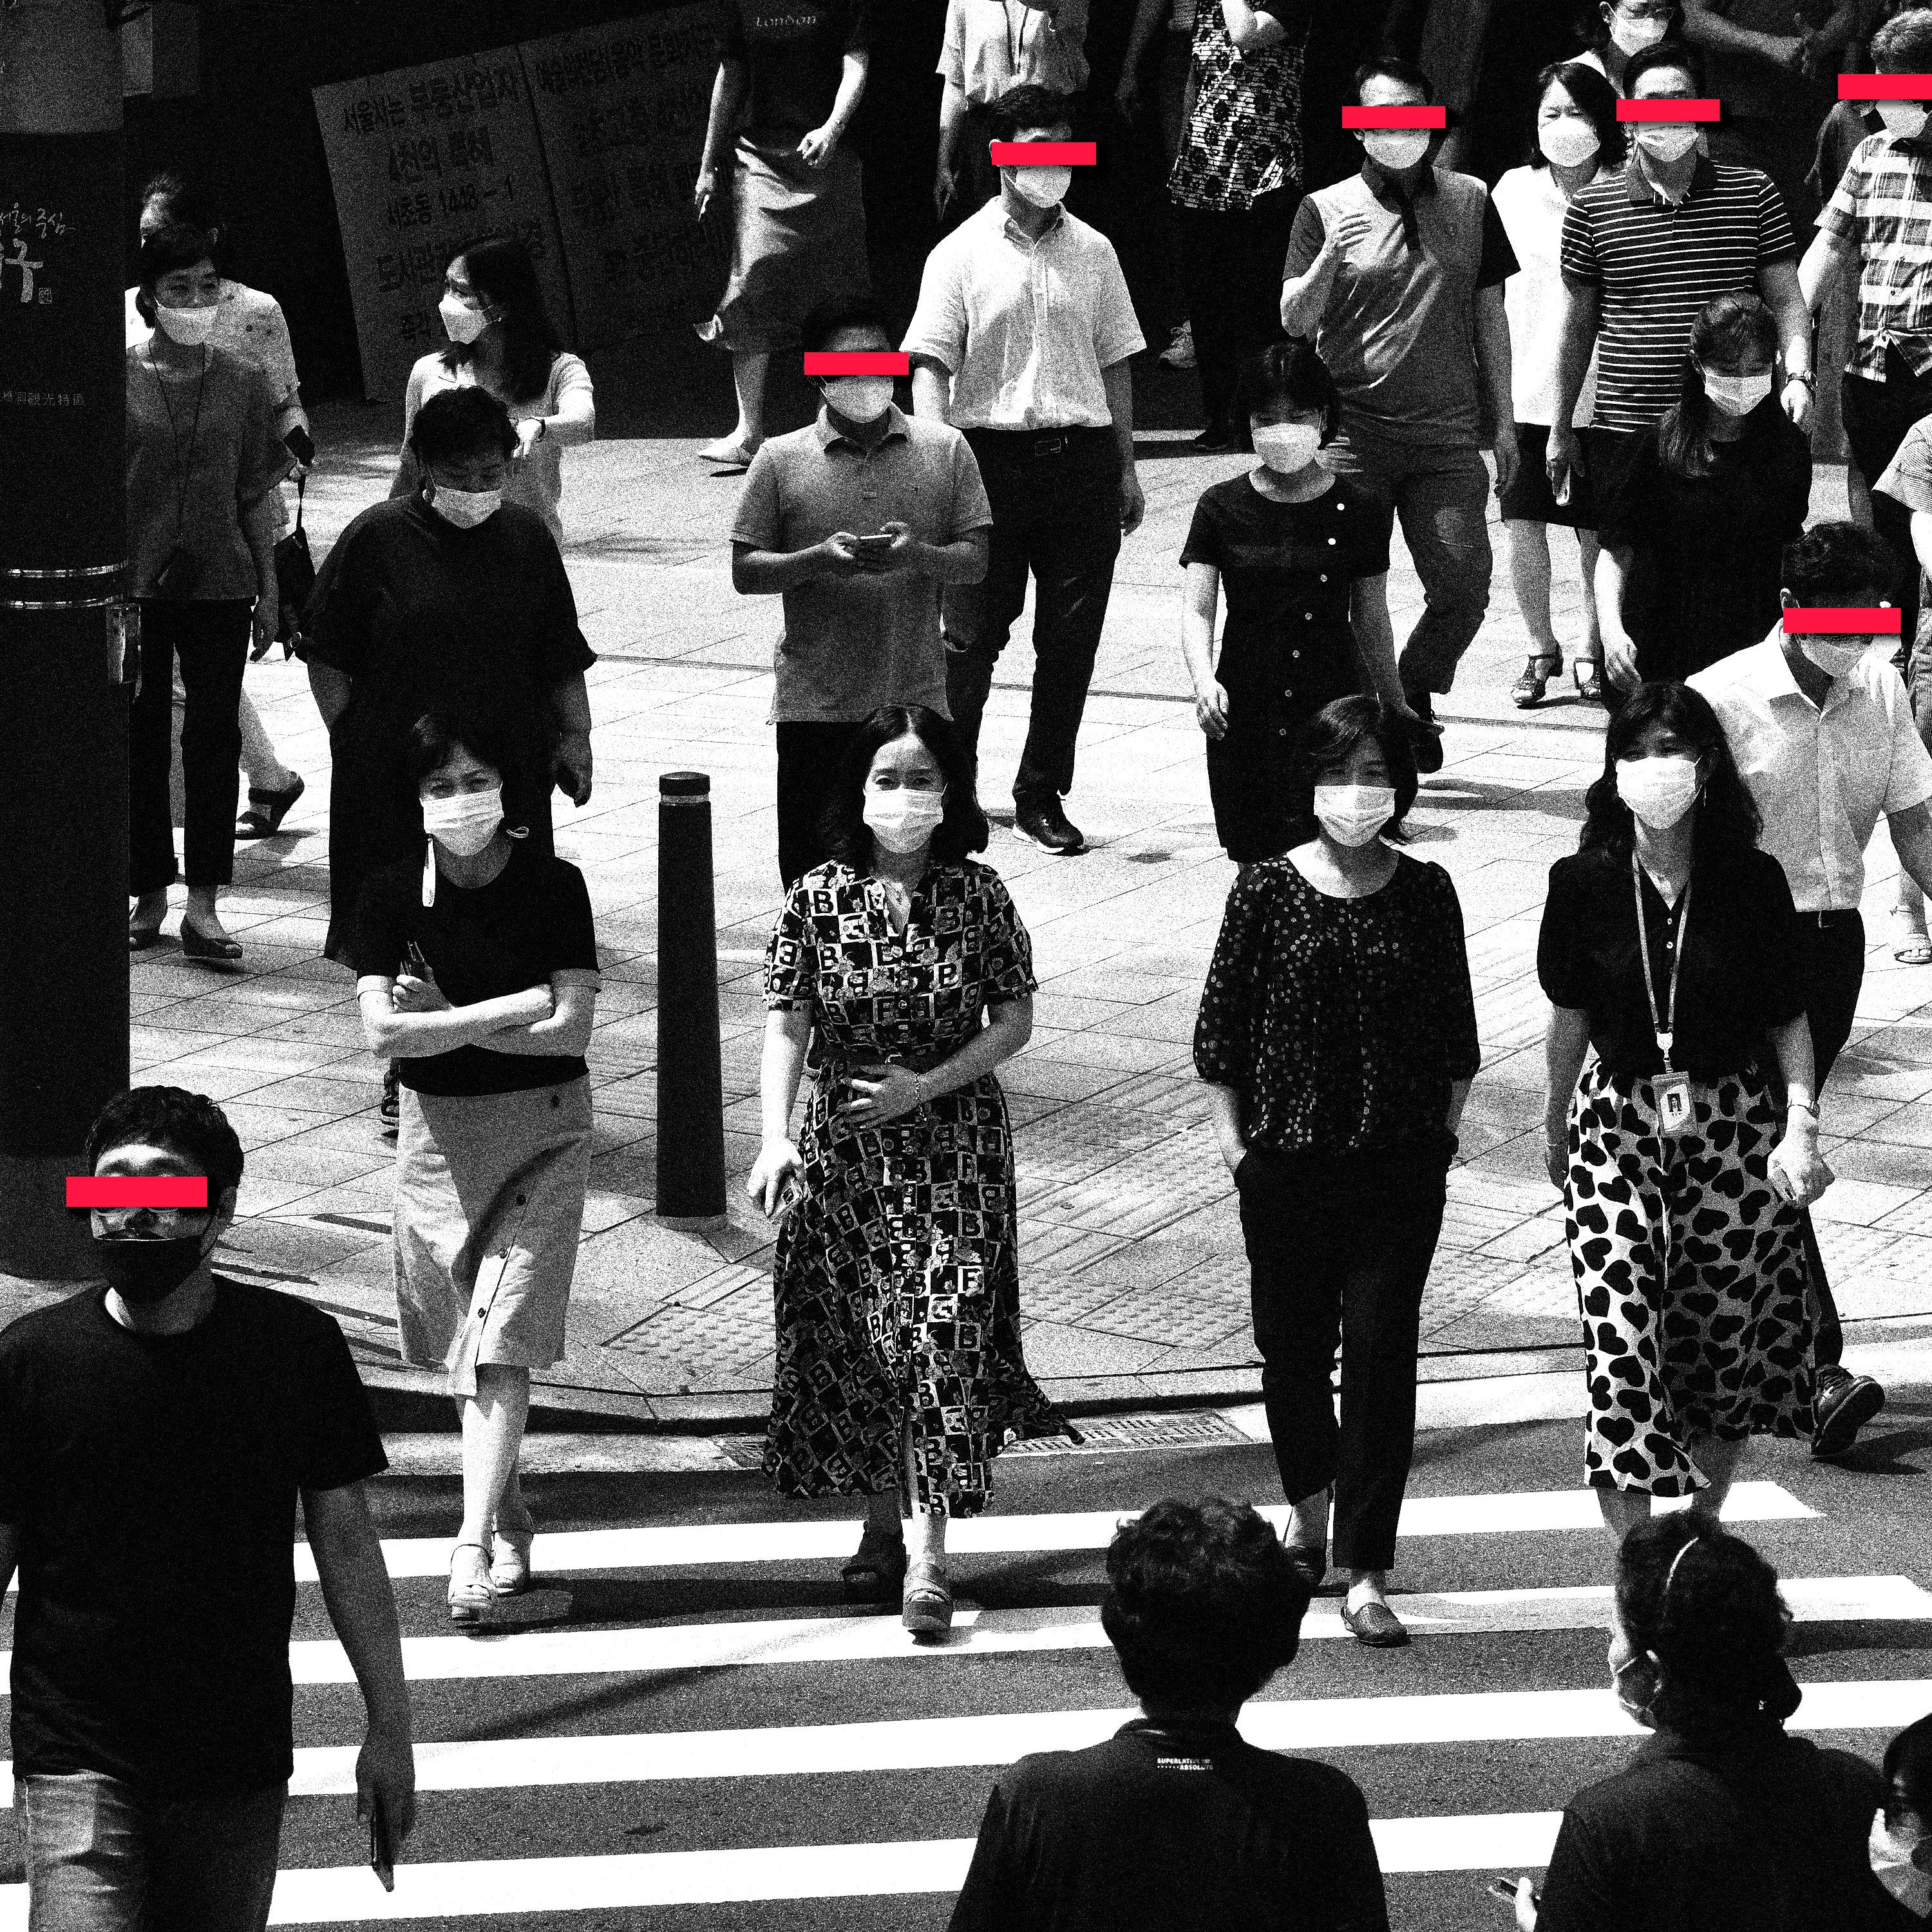 A World Without Men: Inside South Korea's 4B Movement